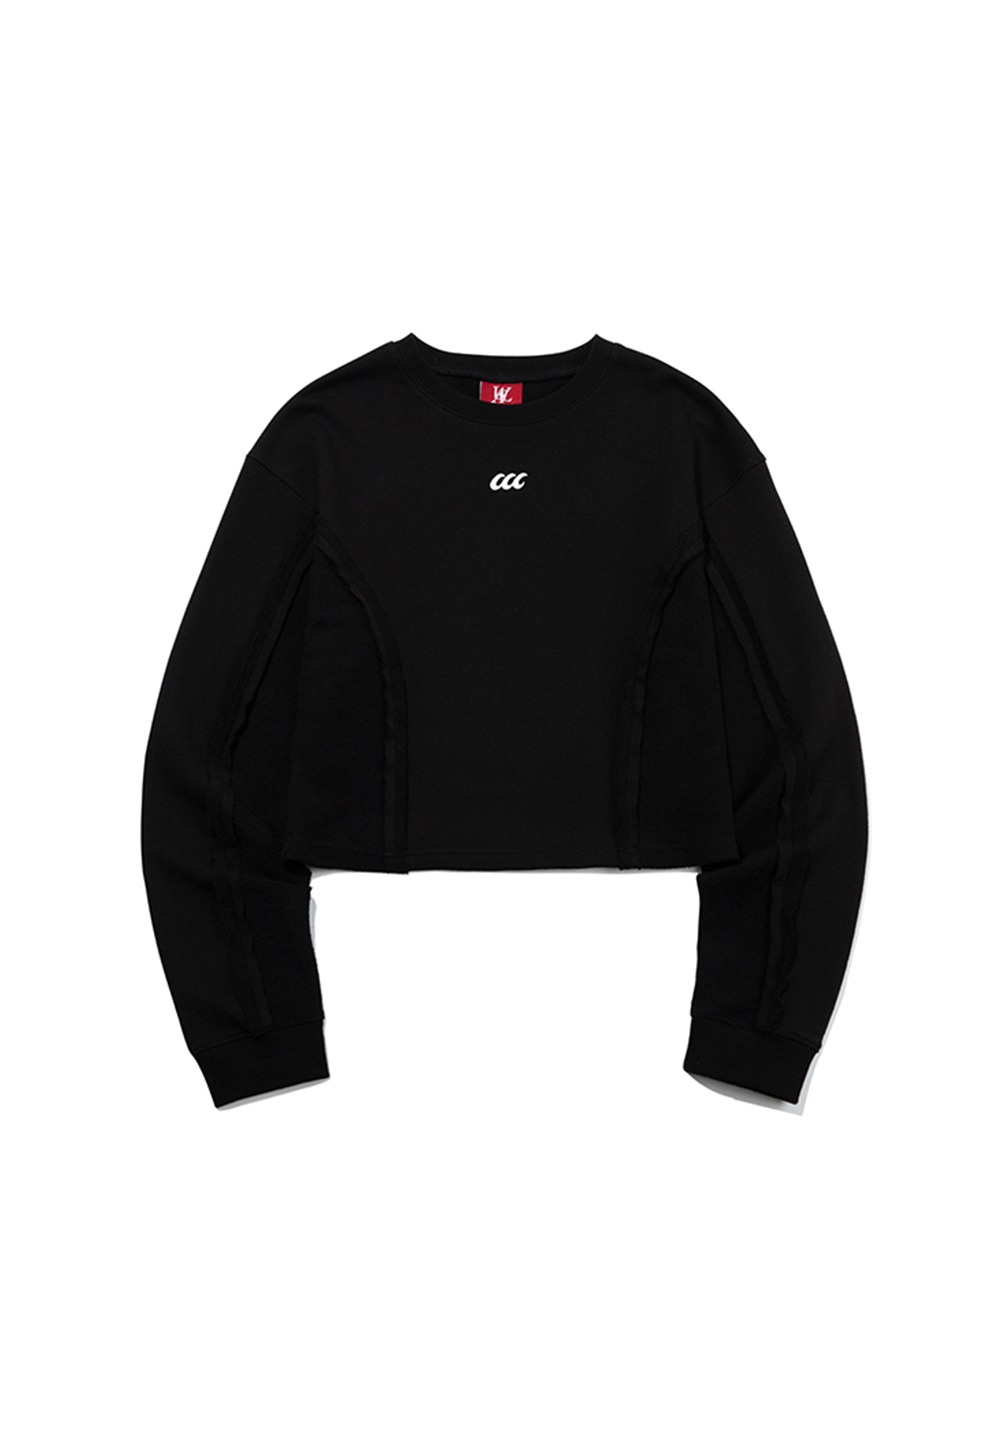 Claw reverse sweatshirt - BLACK